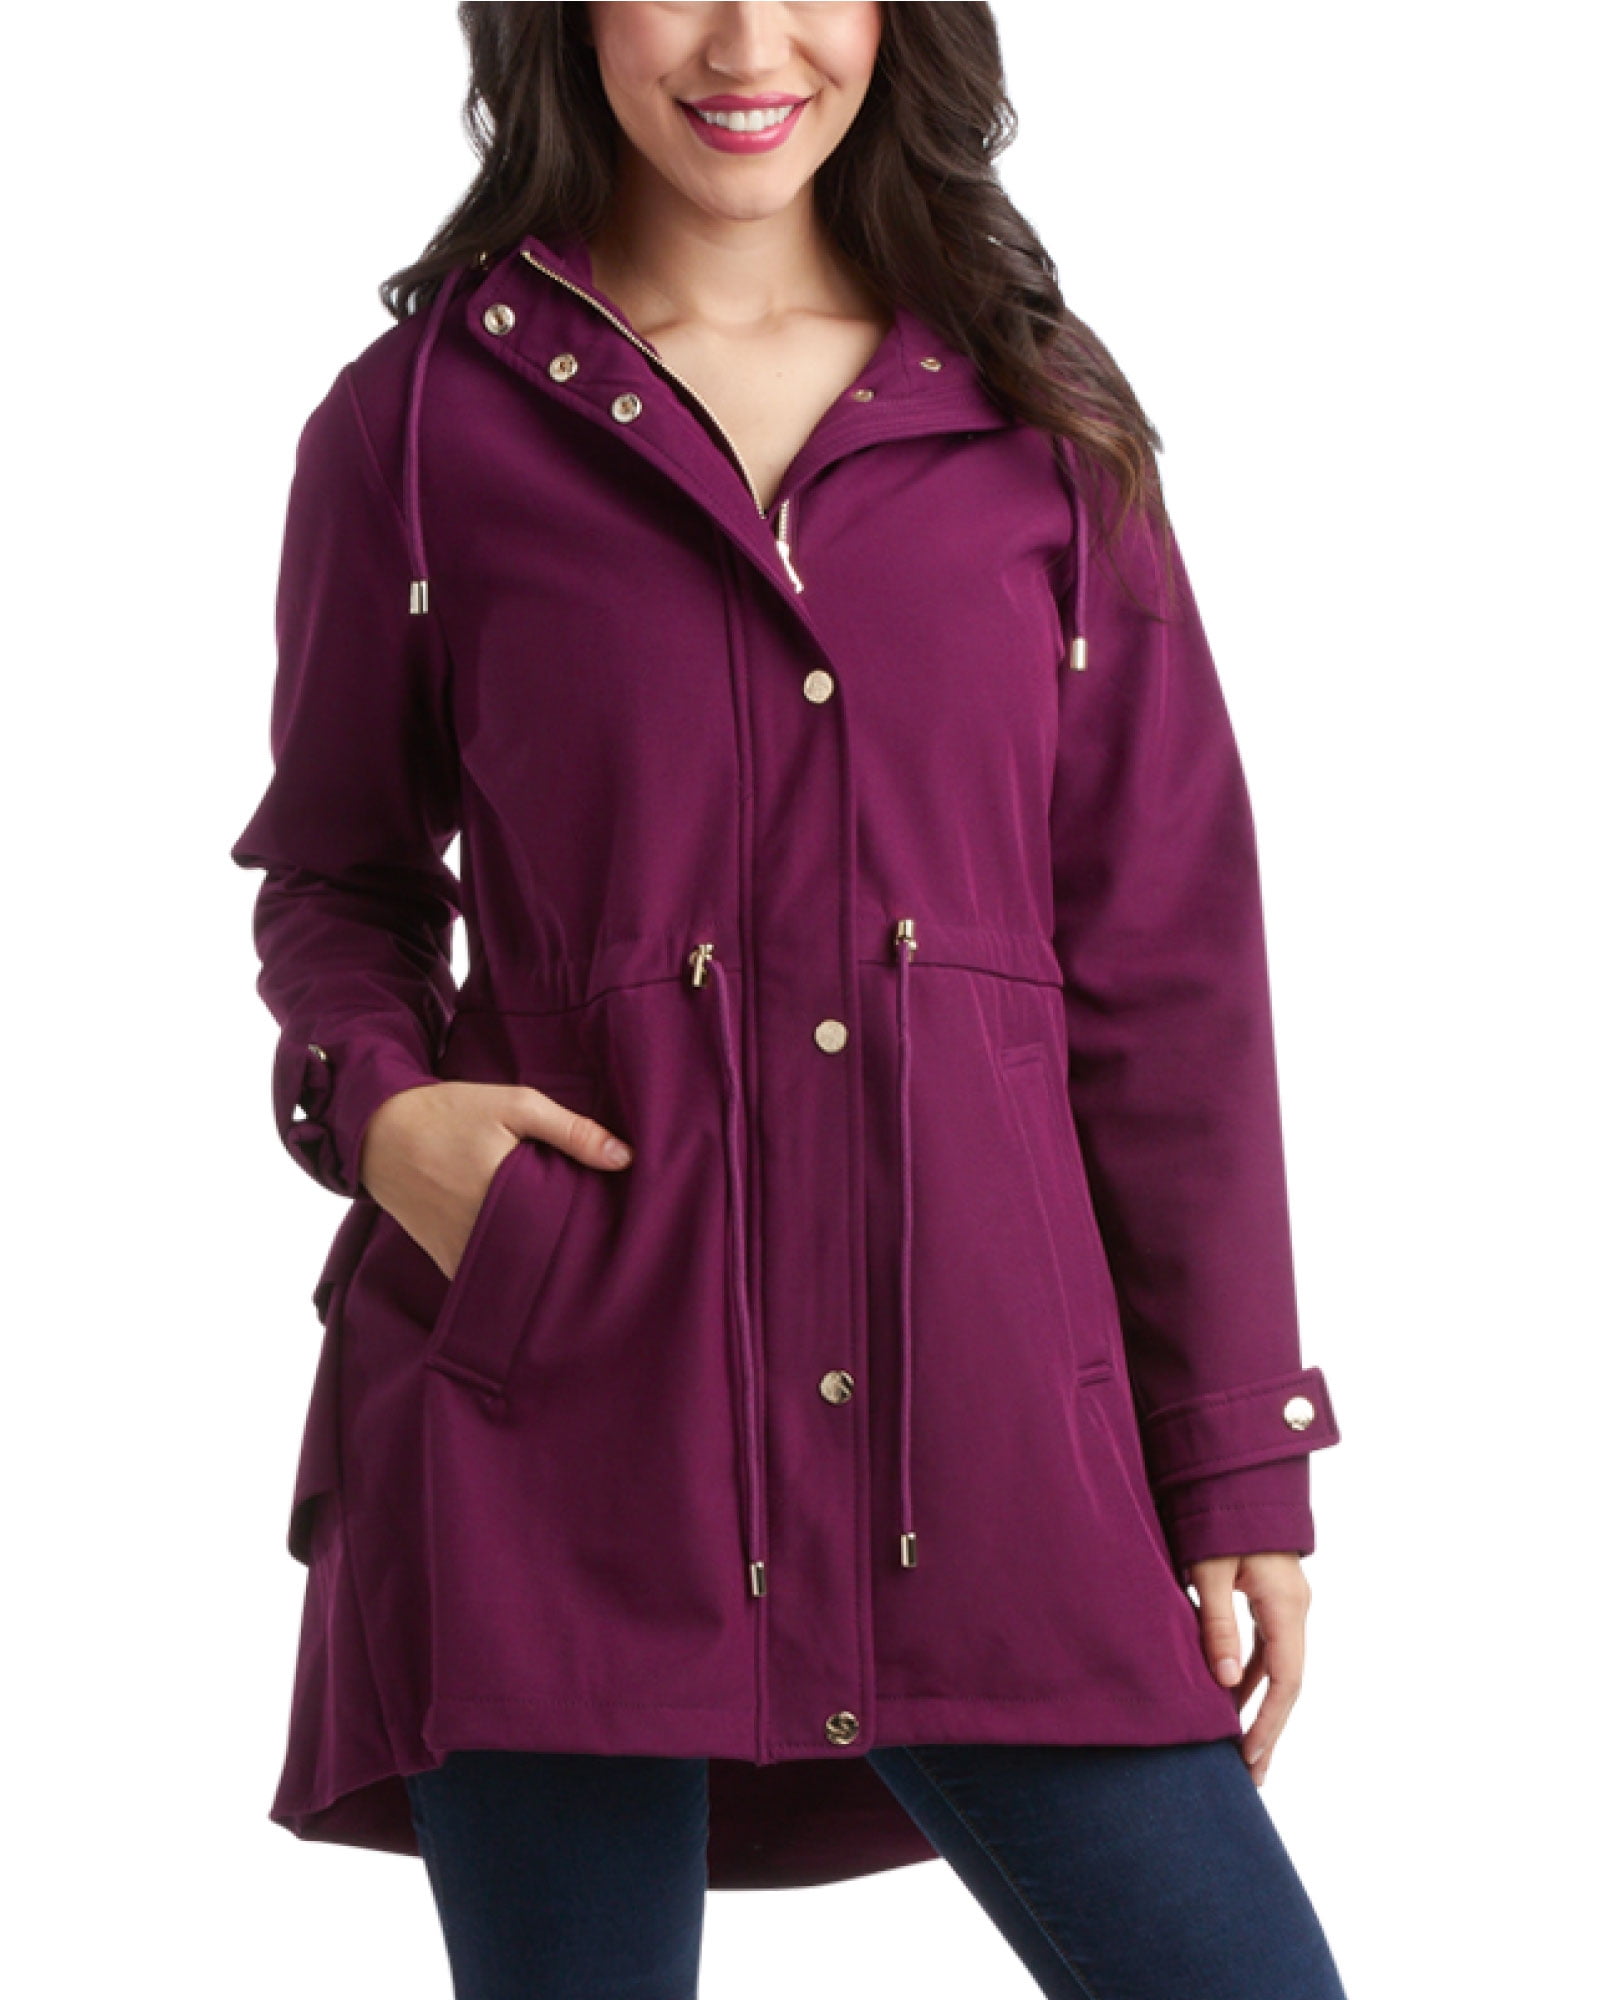 Jessica Simpson Women's Jacket - Waterproof Softshell Raincoat, Ruffle ...